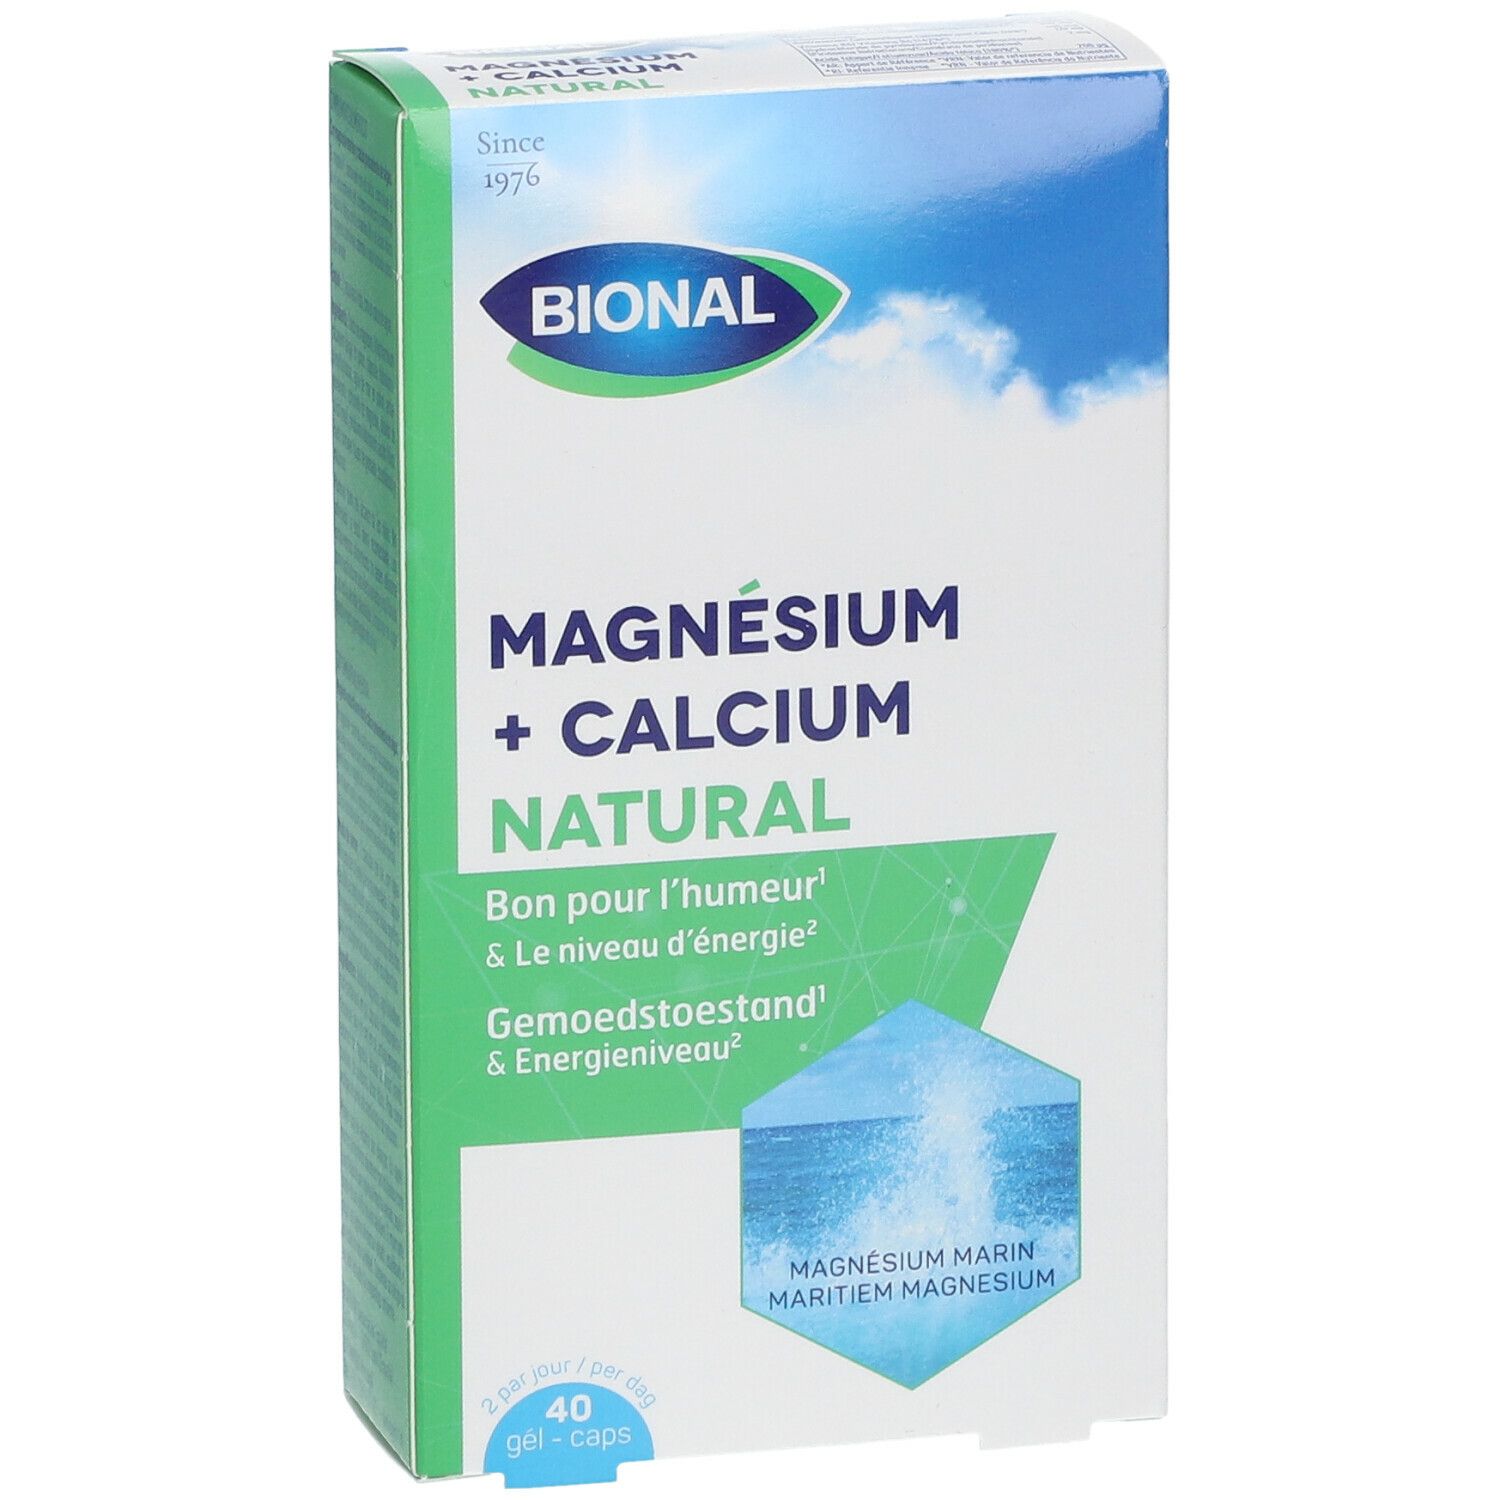 Bional Magnesium + Calcium Natural Kapseln